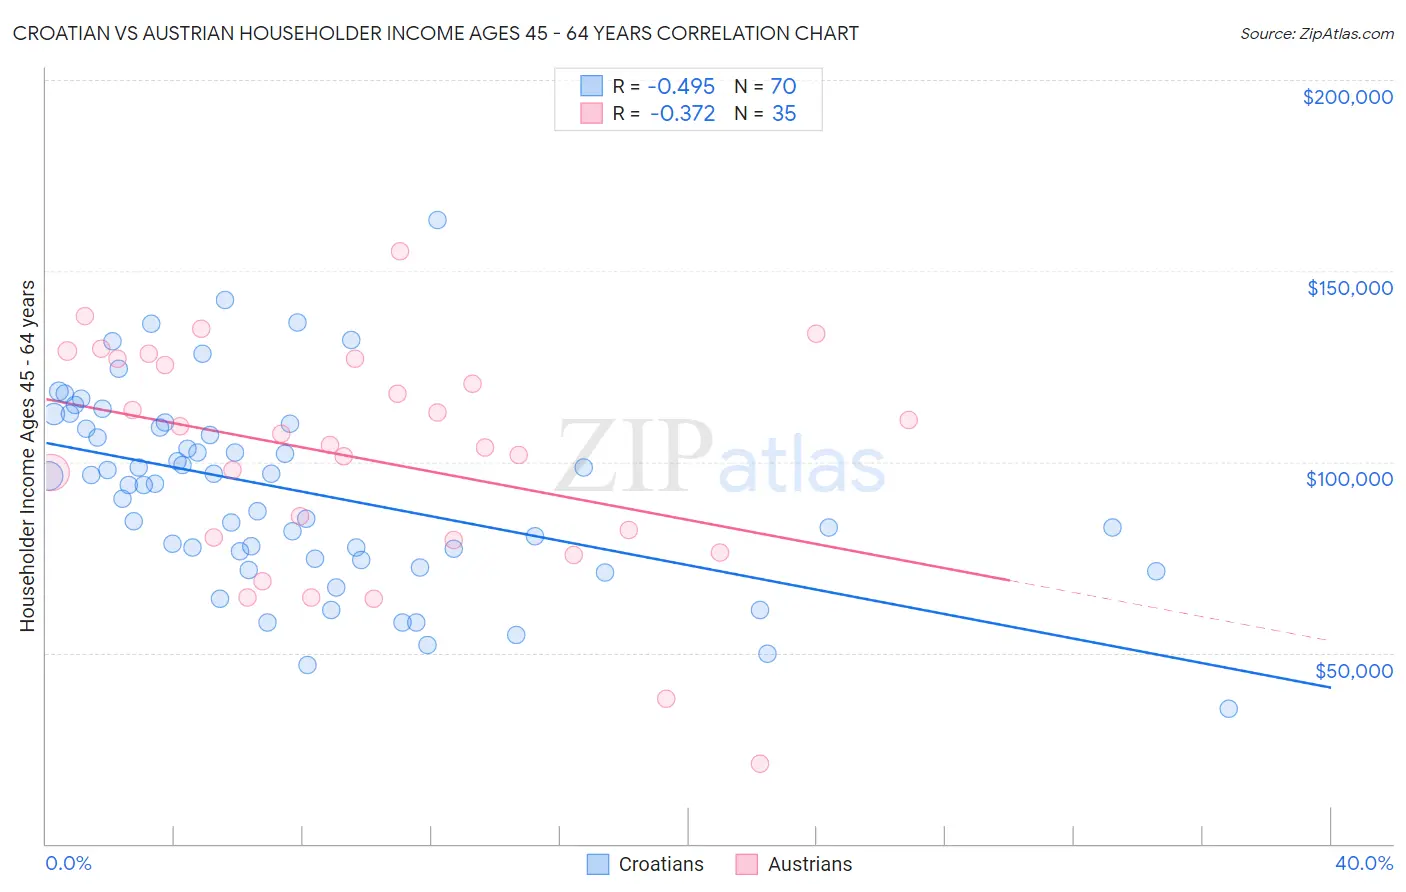 Croatian vs Austrian Householder Income Ages 45 - 64 years